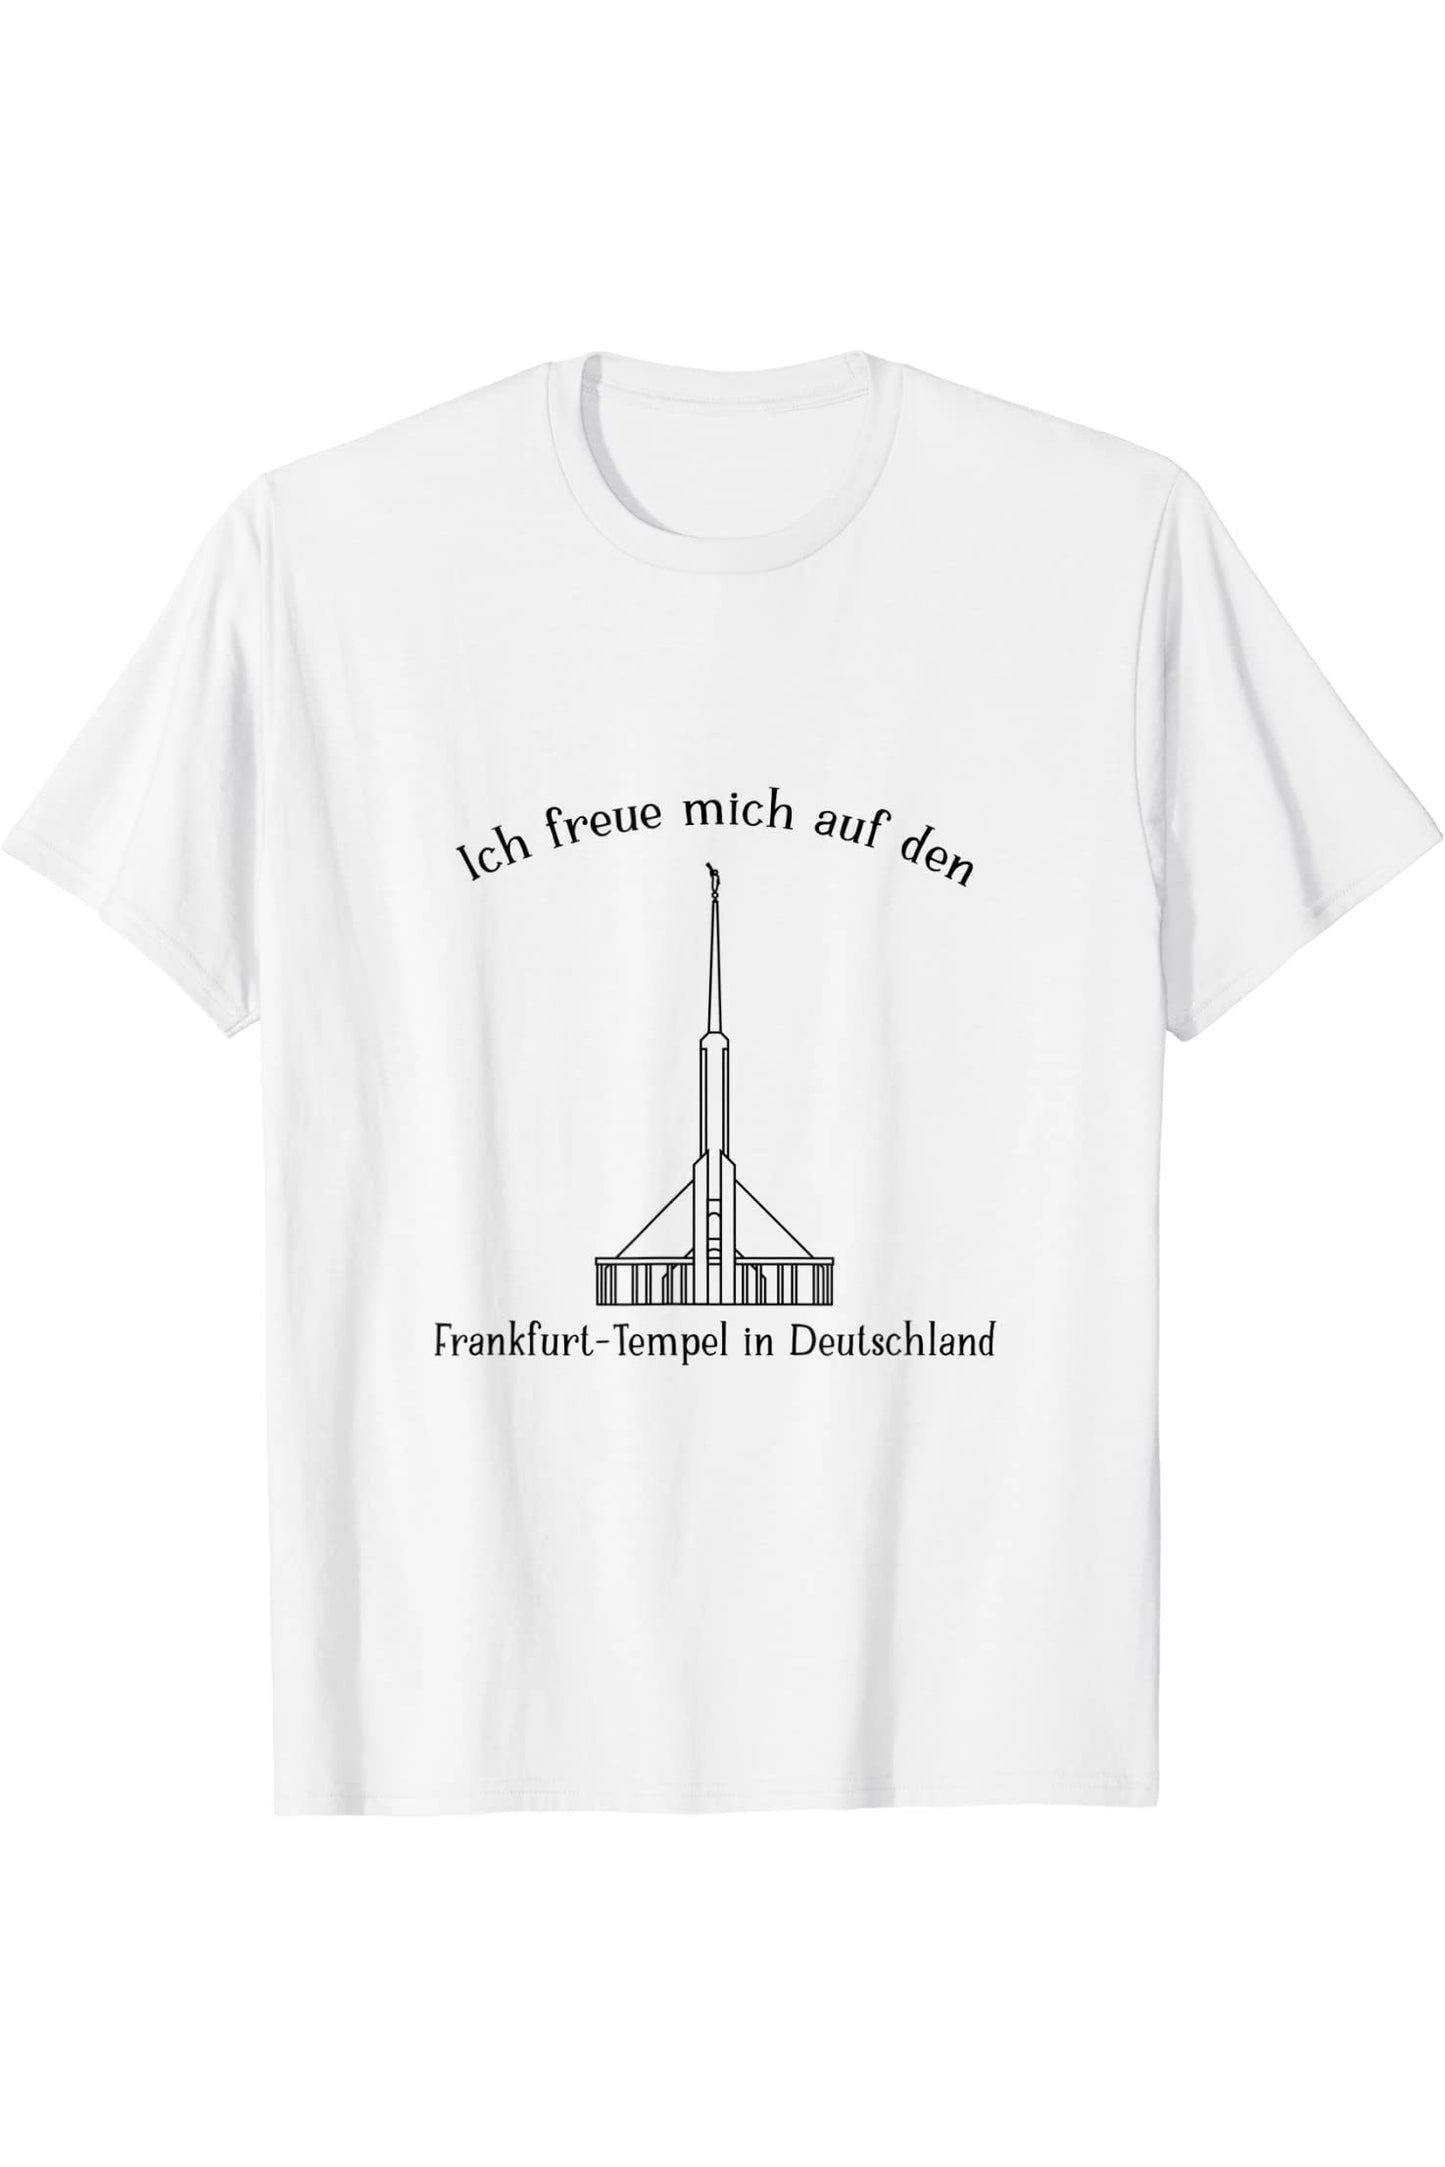 Bountiful Utah Temple, I love to see my temple (ドイツ語) T-Shirt